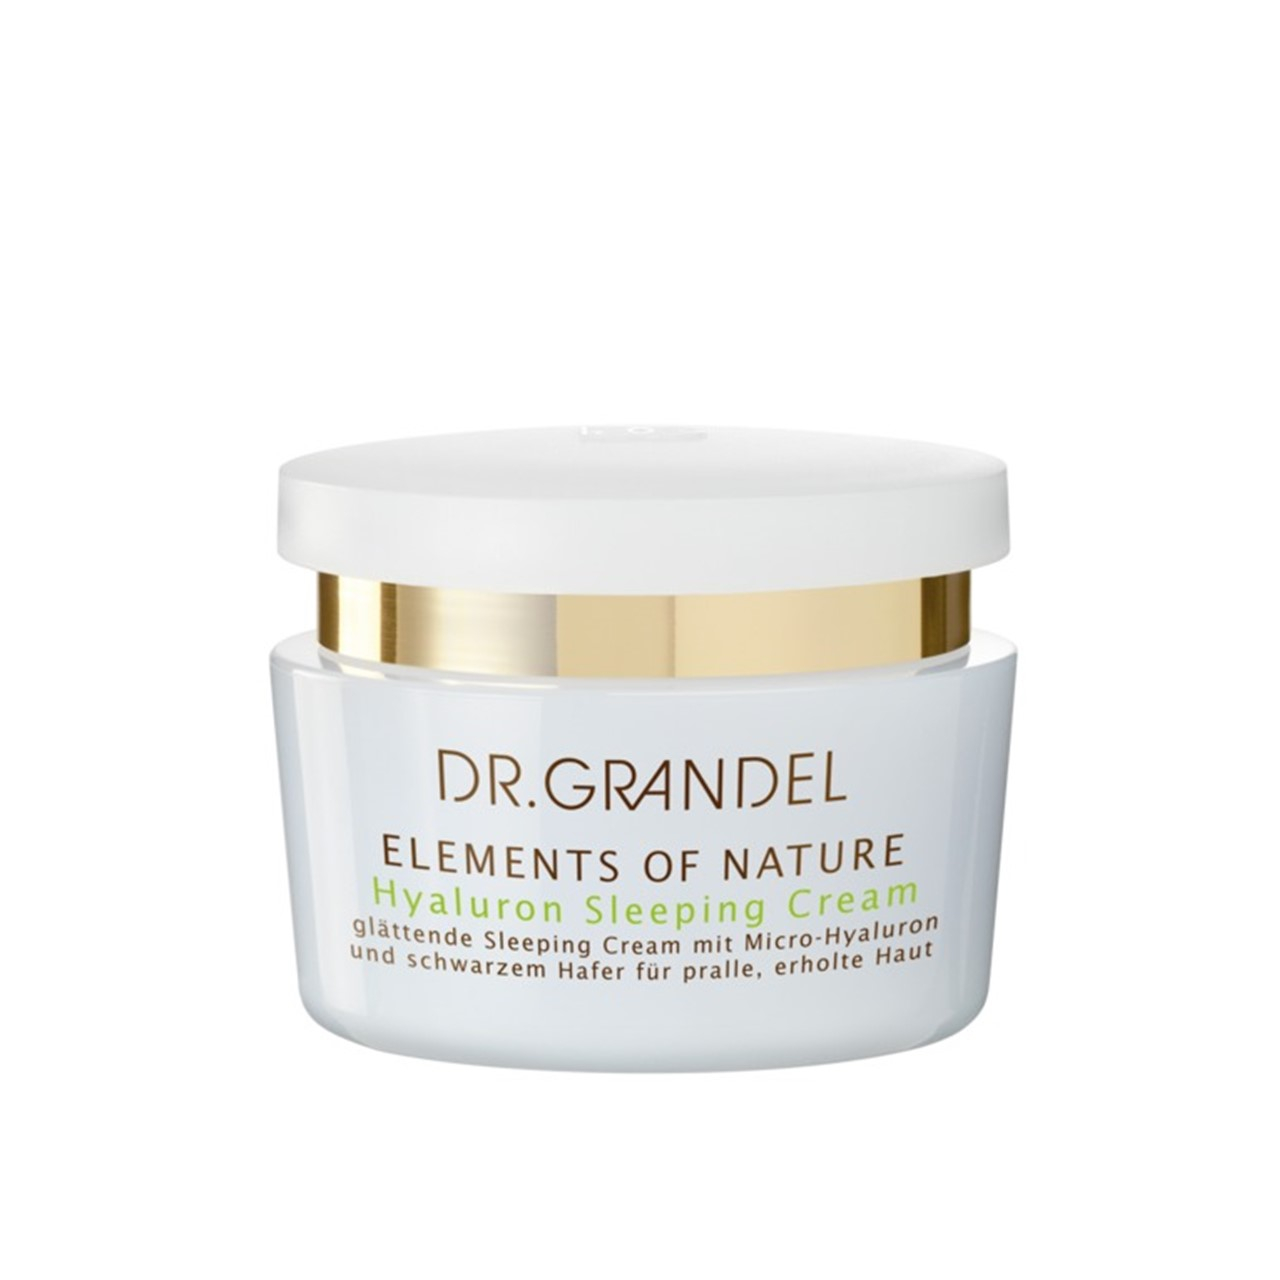 DR. GRANDEL Elements Of Nature Hyaluron Sleeping Cream 50ml